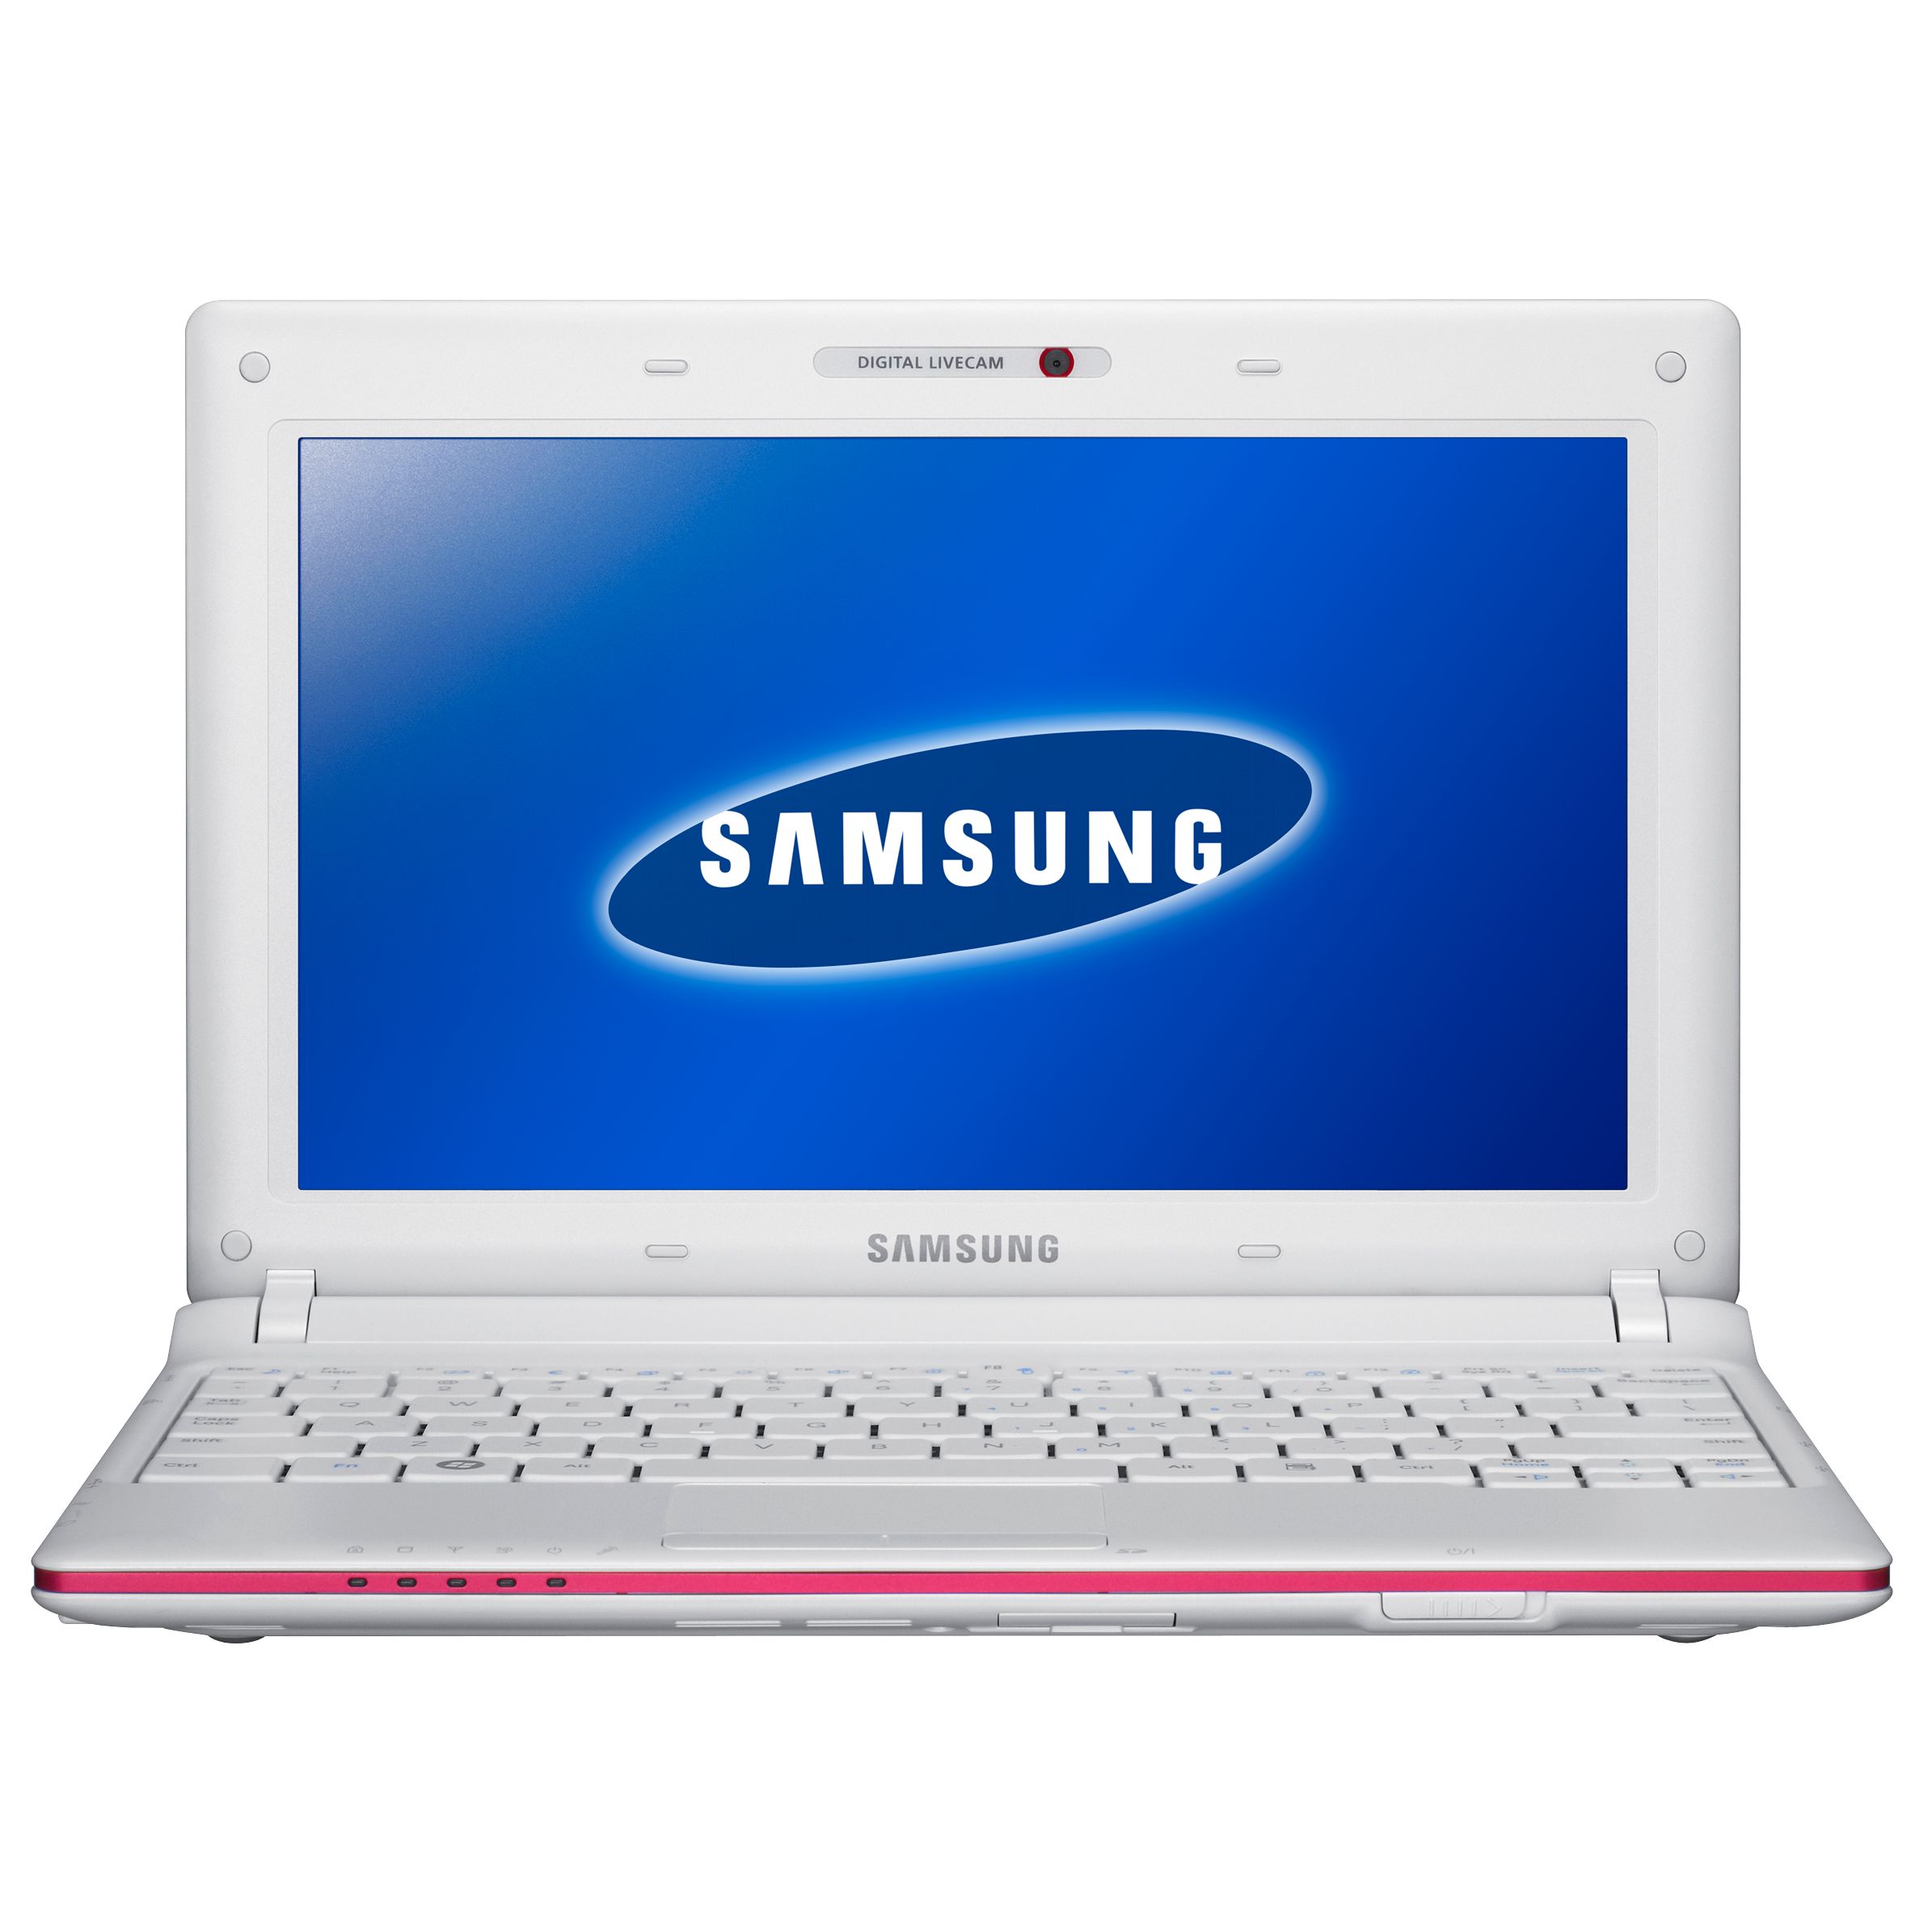 Samsung N145 Netbook, 1.66GHz with 10.1 Inch Display, Pink at John Lewis